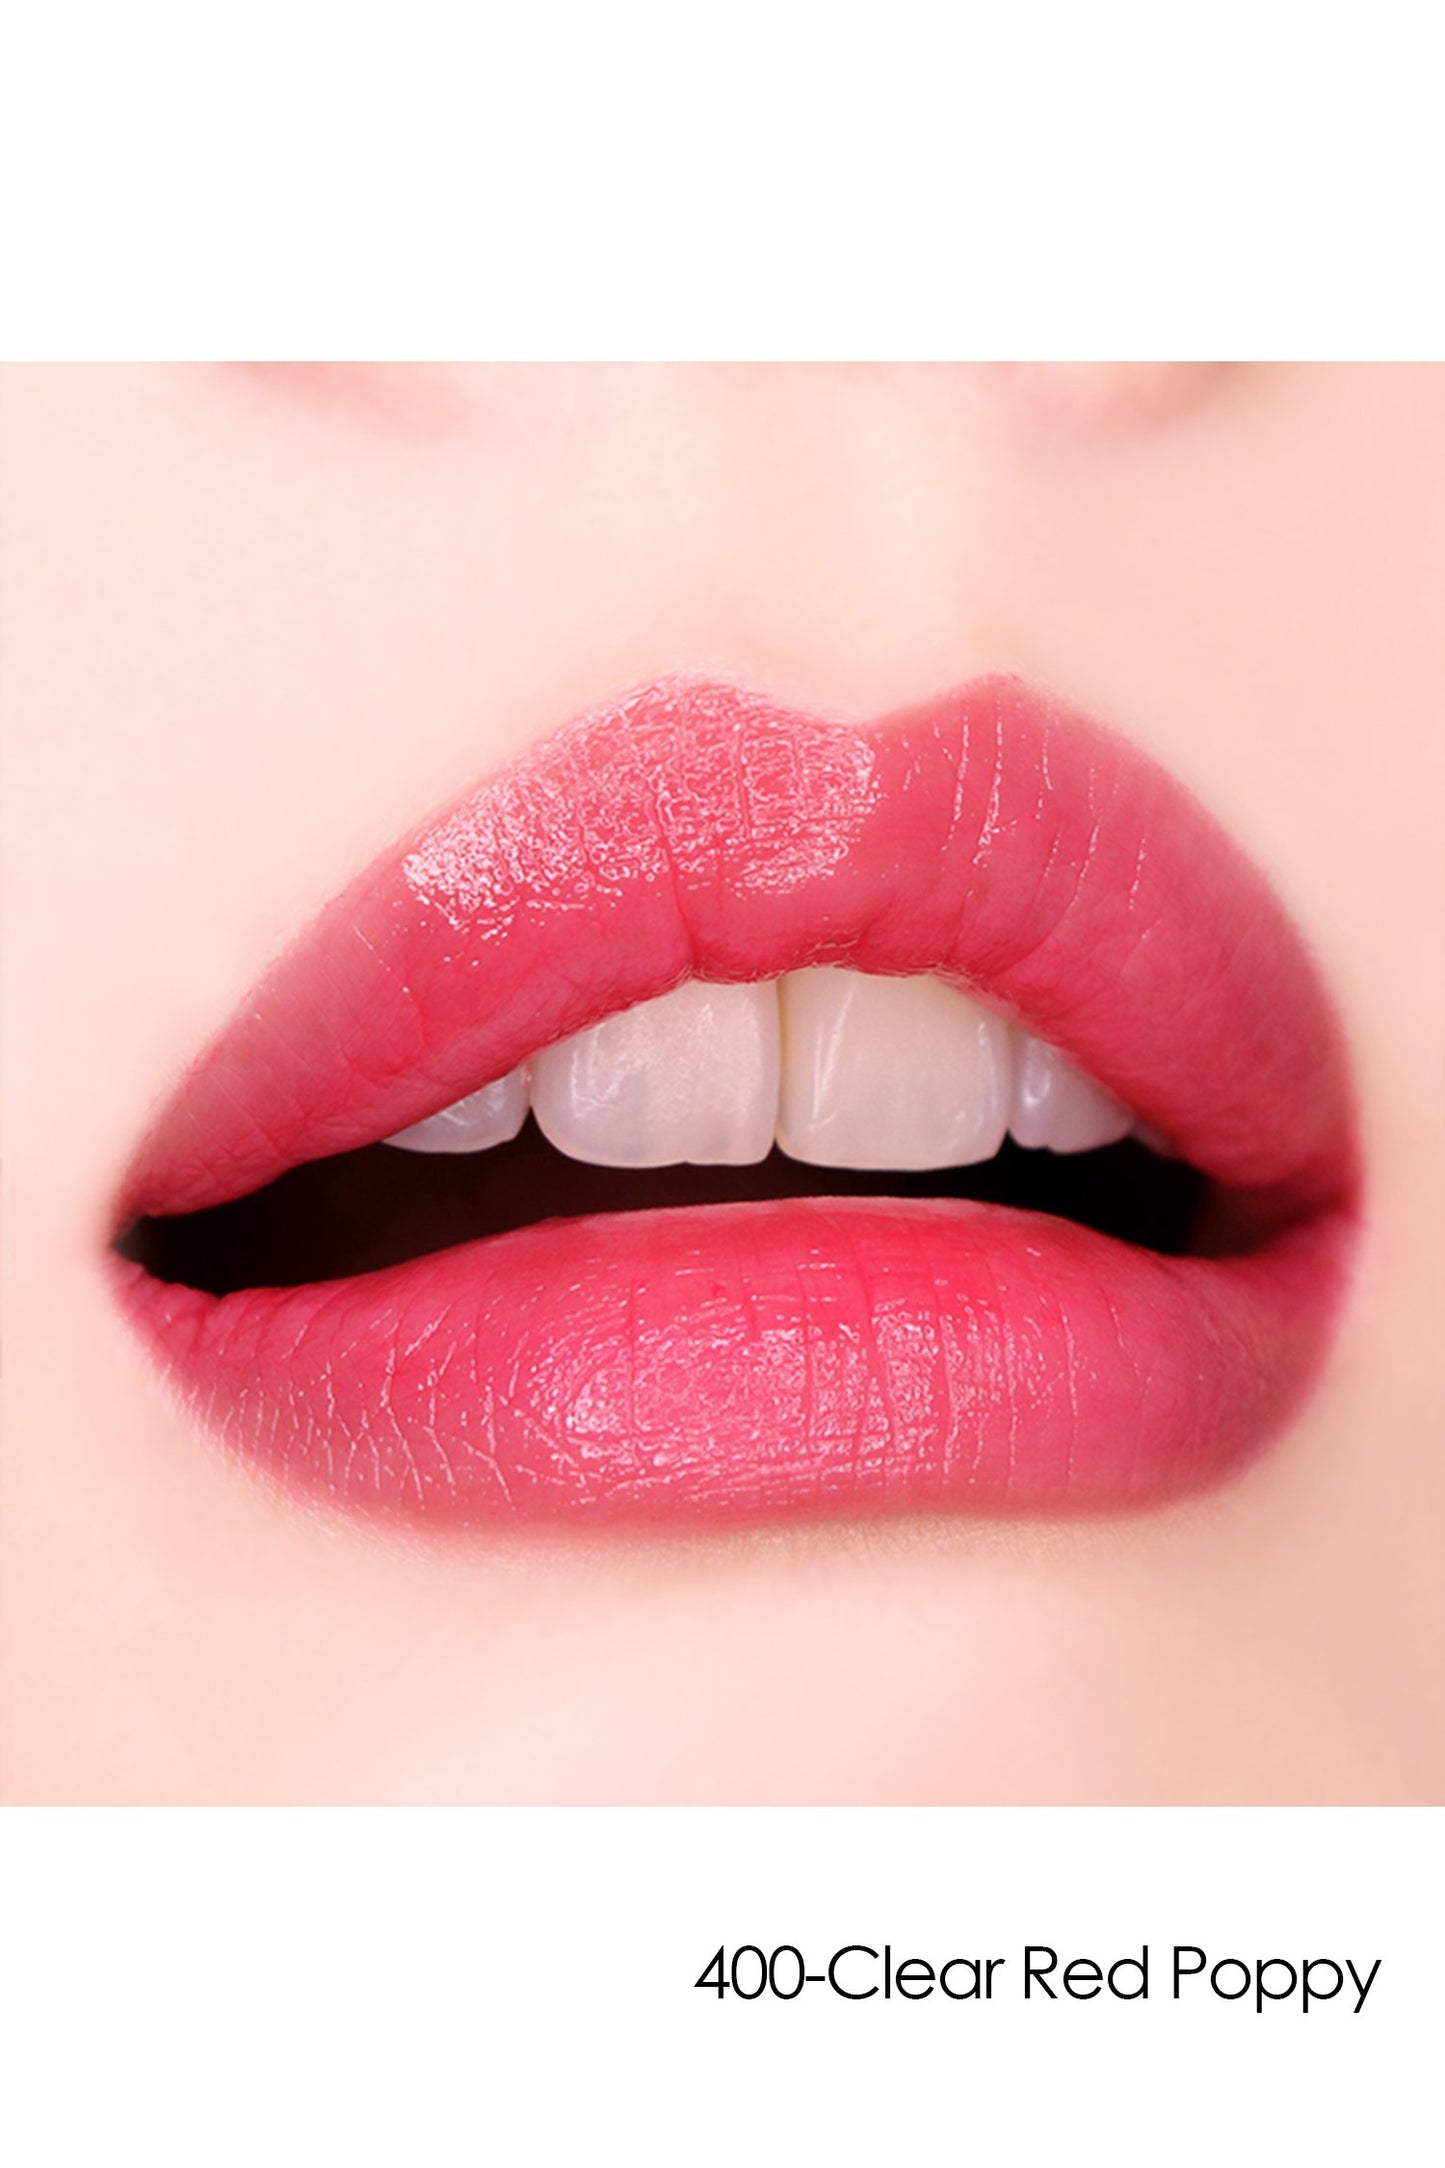 Lipstick S: Sheer Flower 400-Clear Red Poppy  on lips